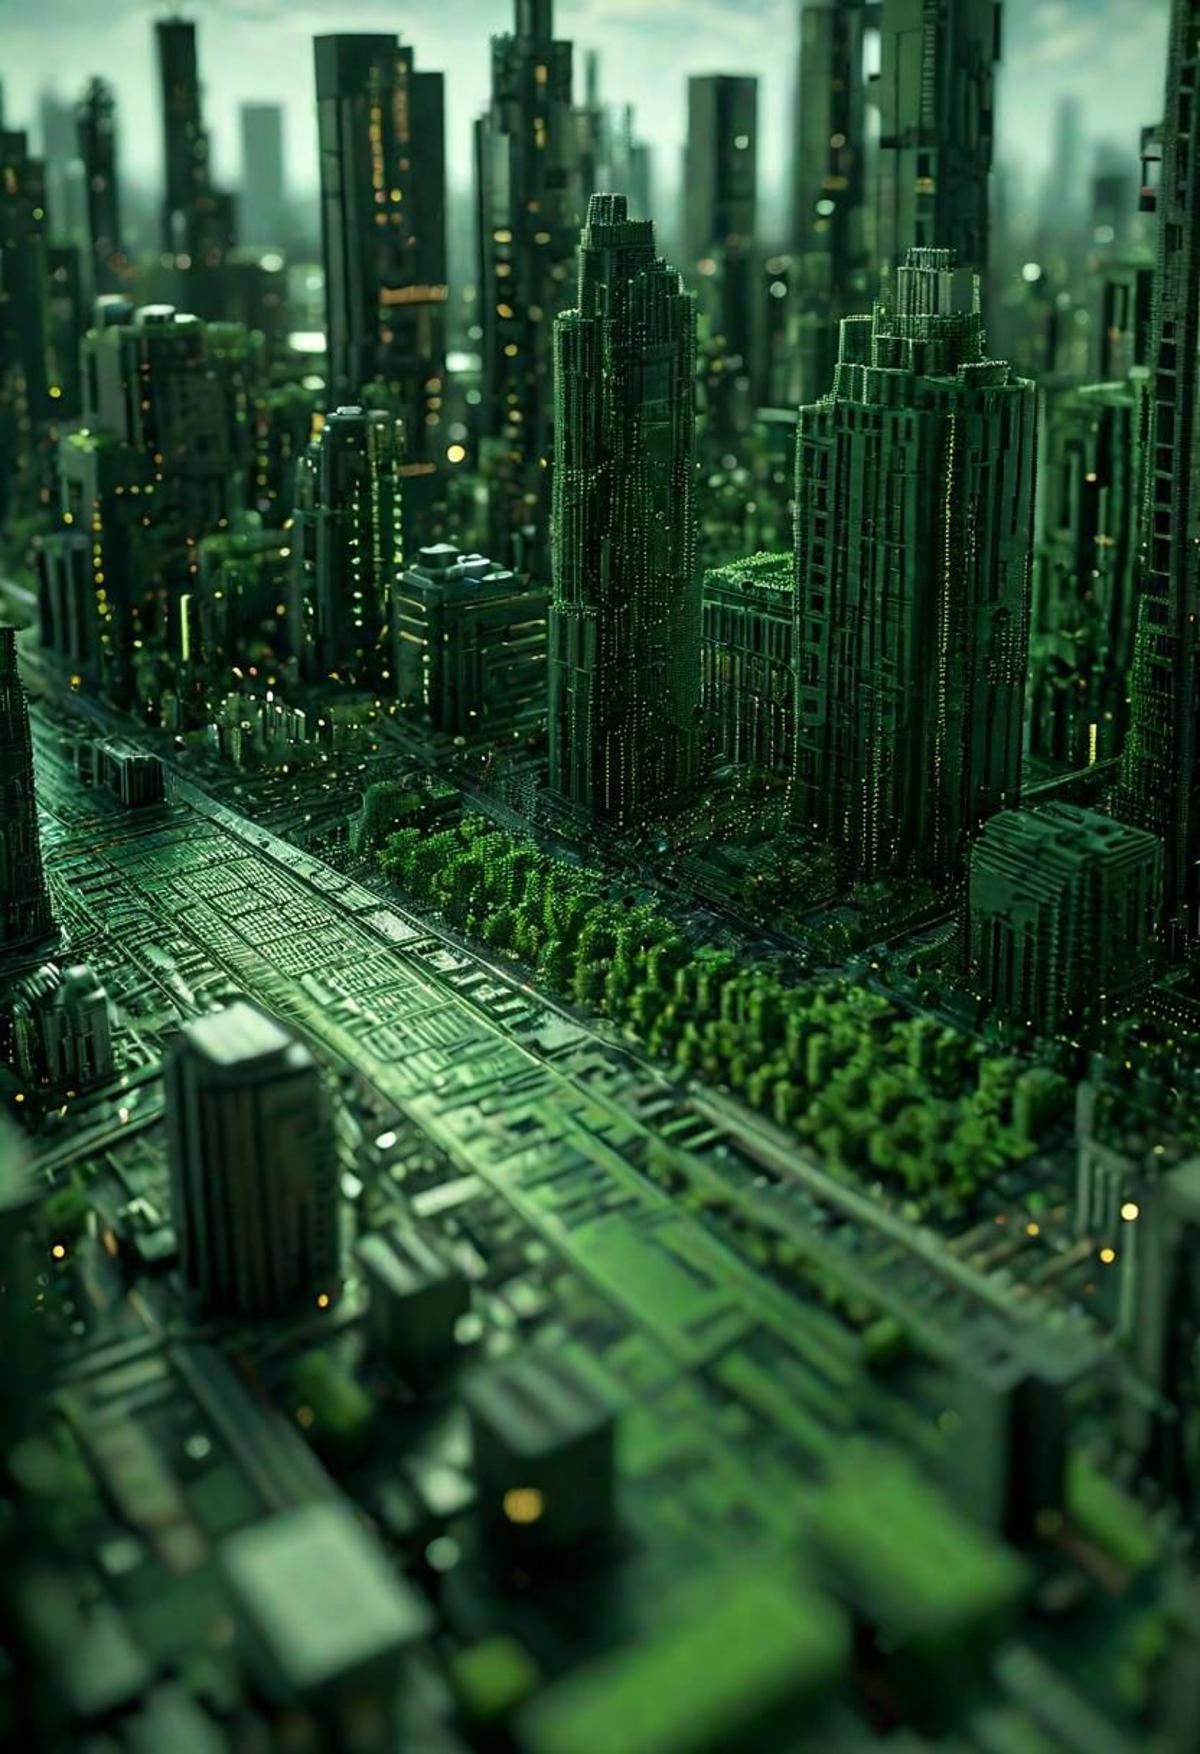 Dark Futuristic Circuit Boards image by zzSwifty360